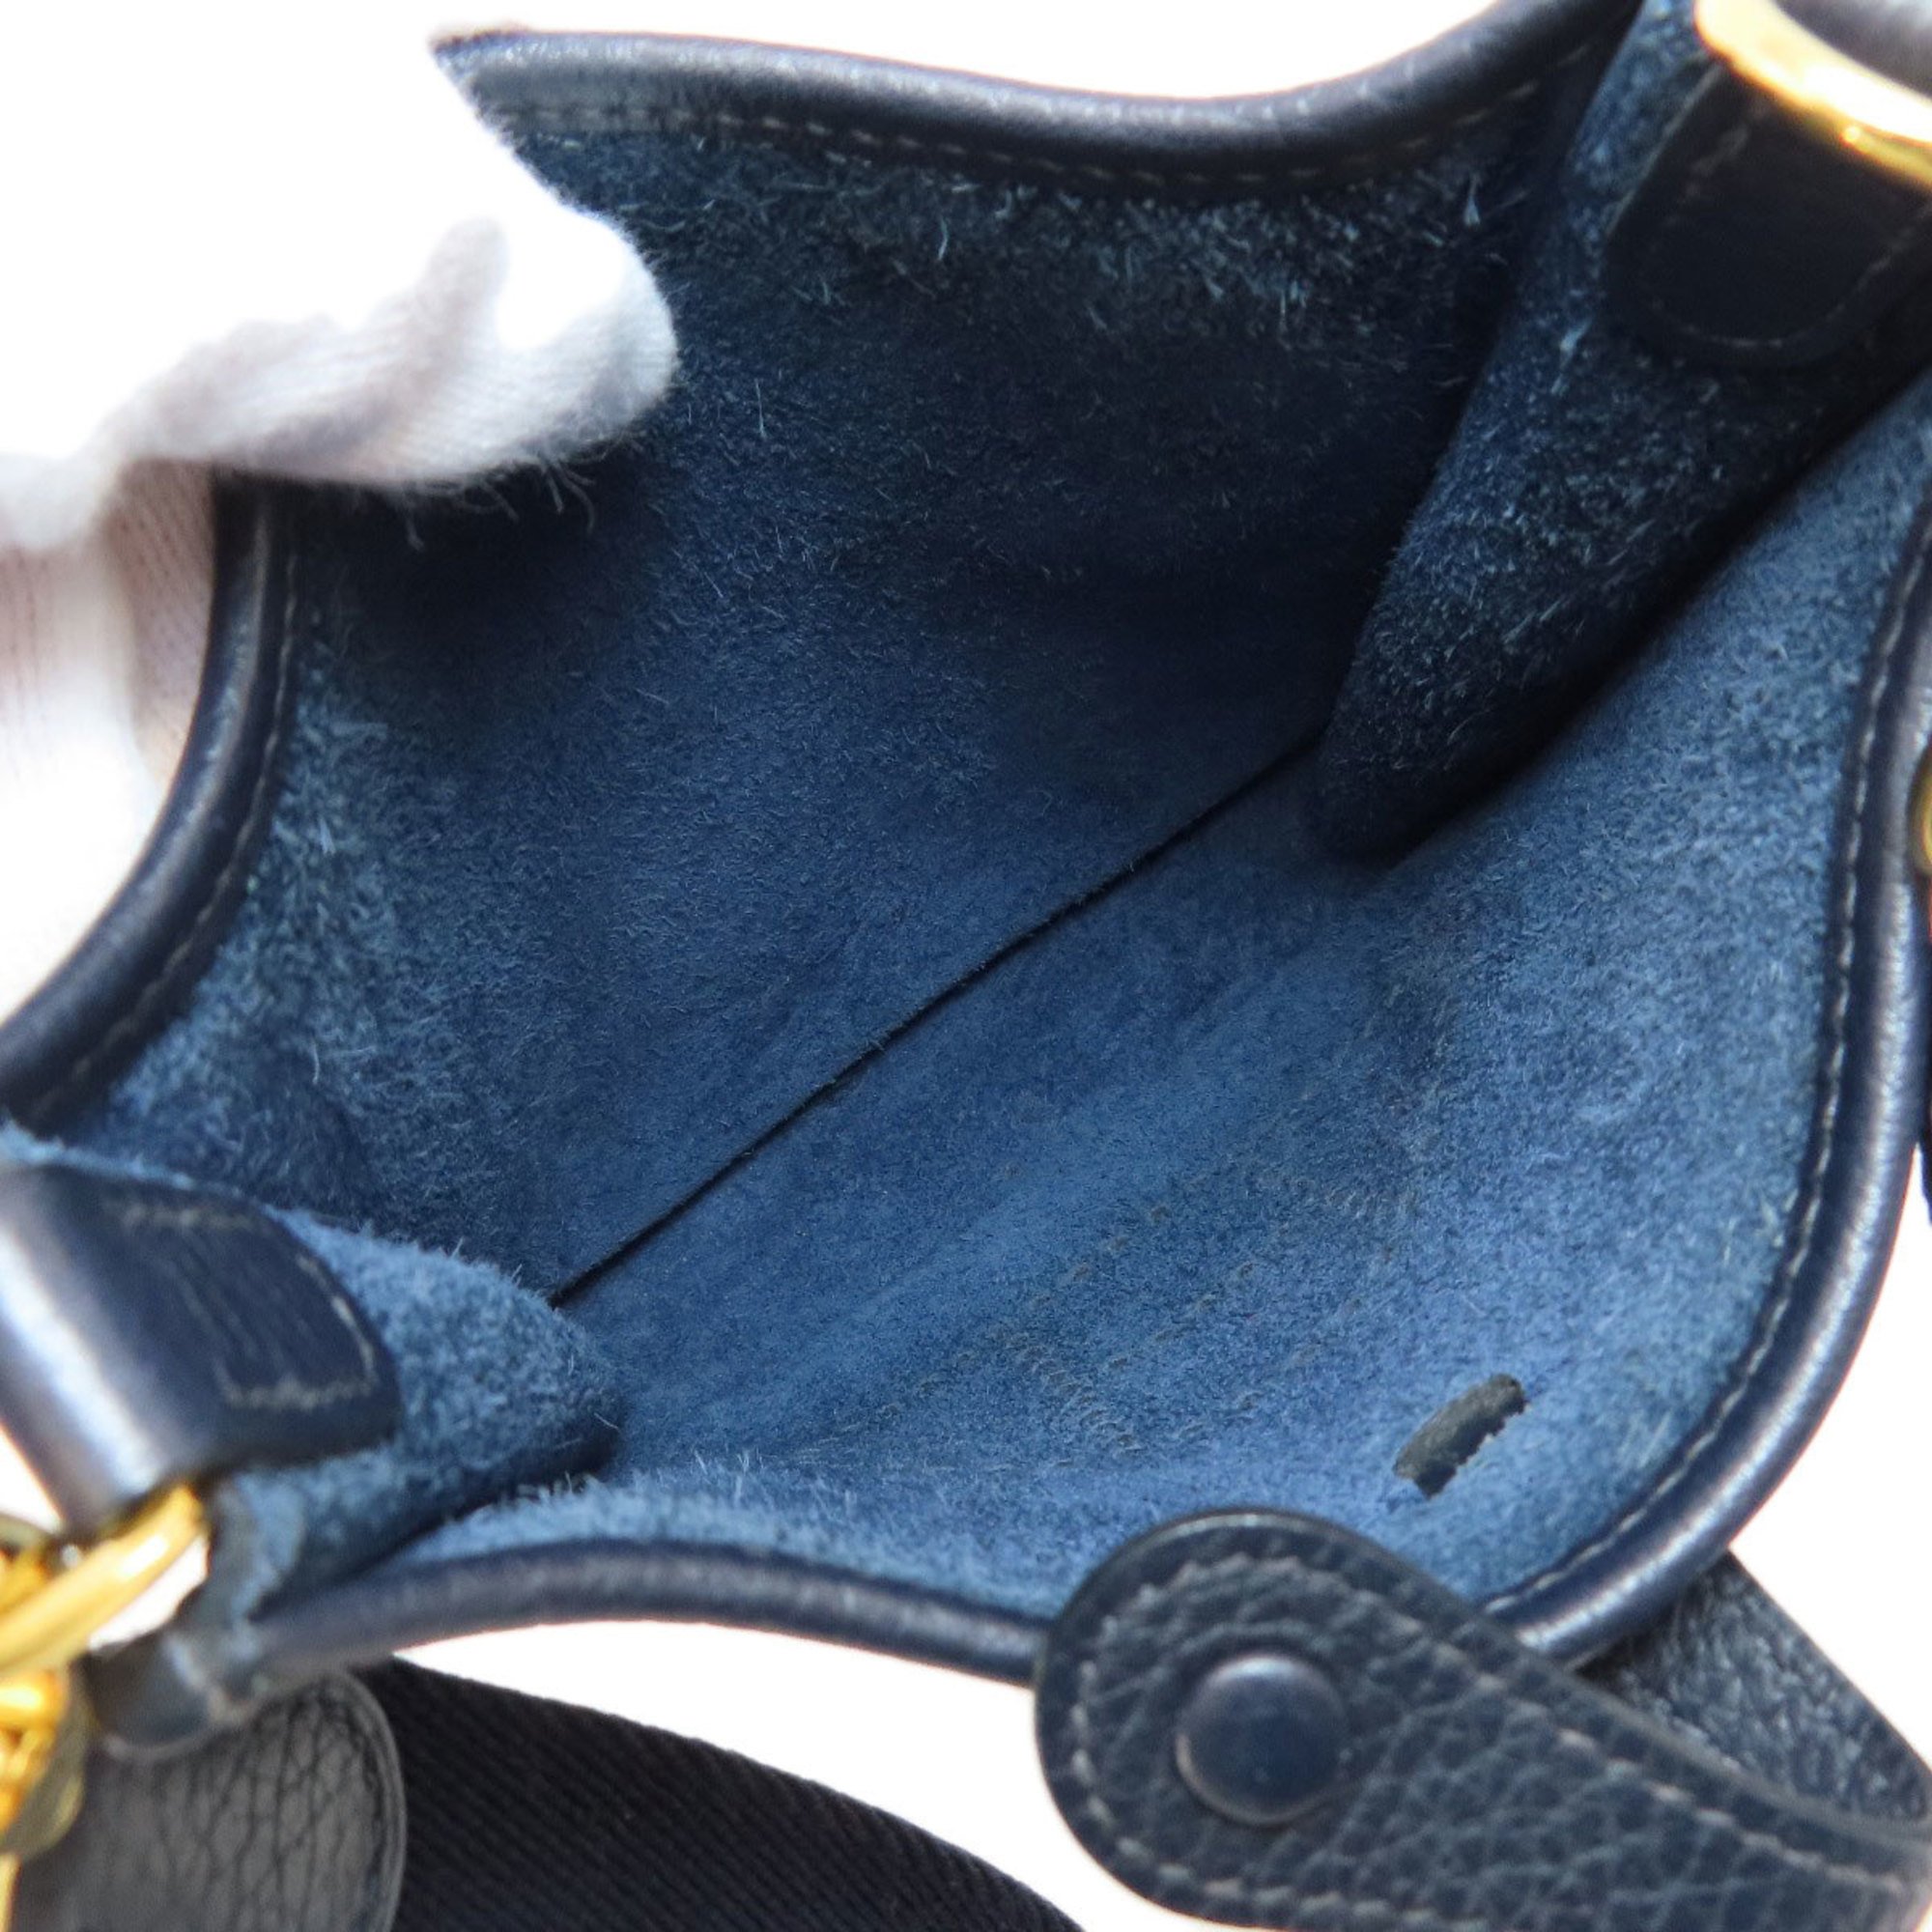 Hermes Evelyn TPM Blue Nuit Shoulder Bag Taurillon Women's